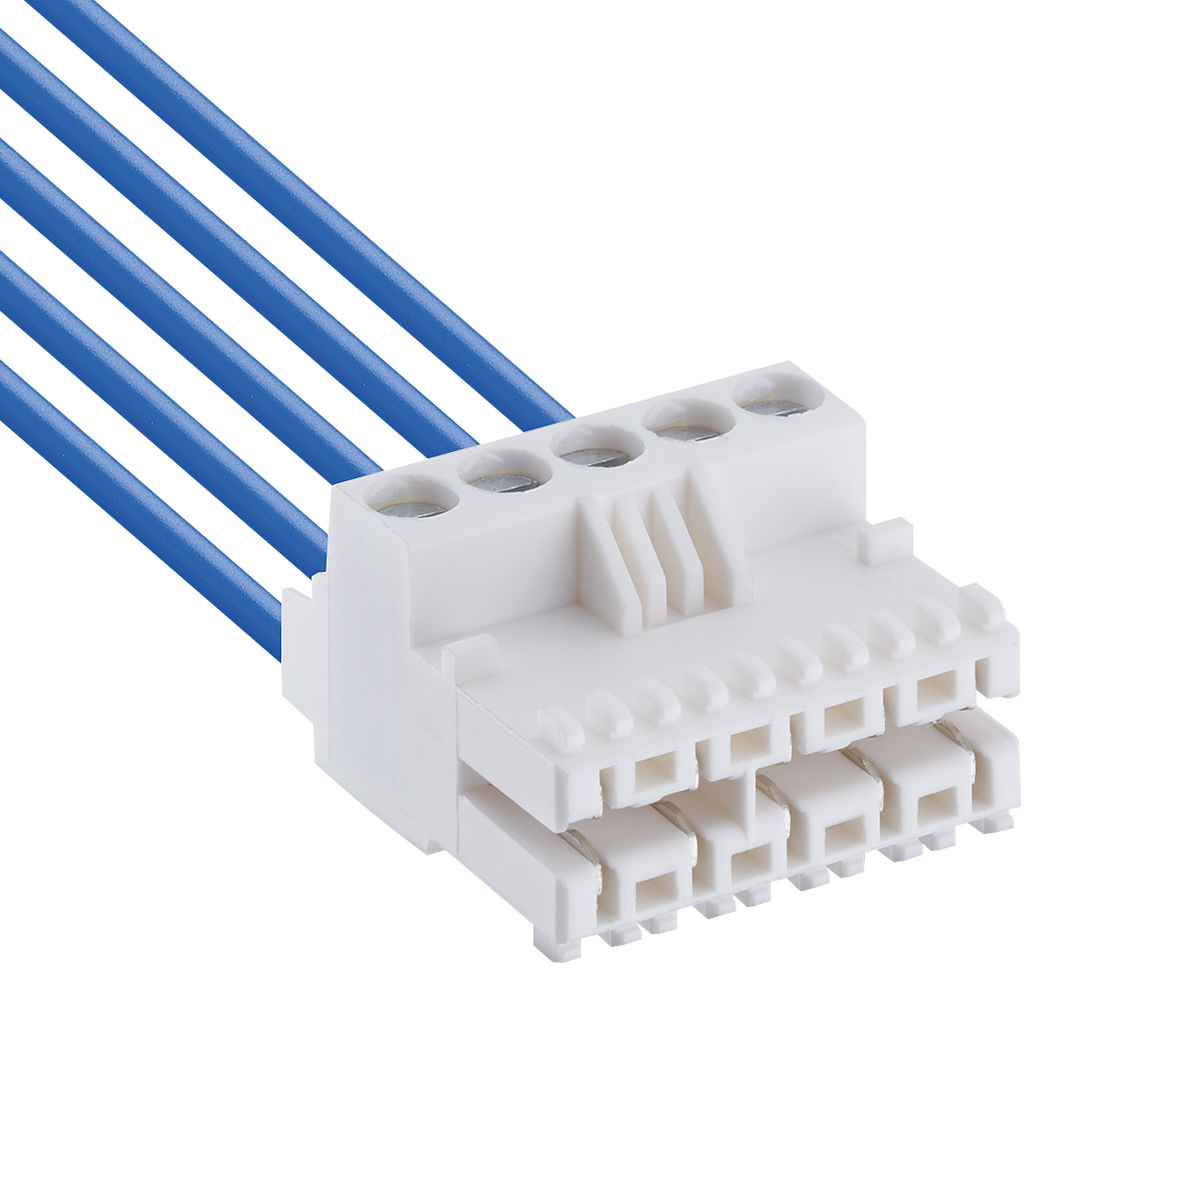 Lumberg: 3613 (Series 36 | RAST 5 connectors, pitch 5.0 mm)